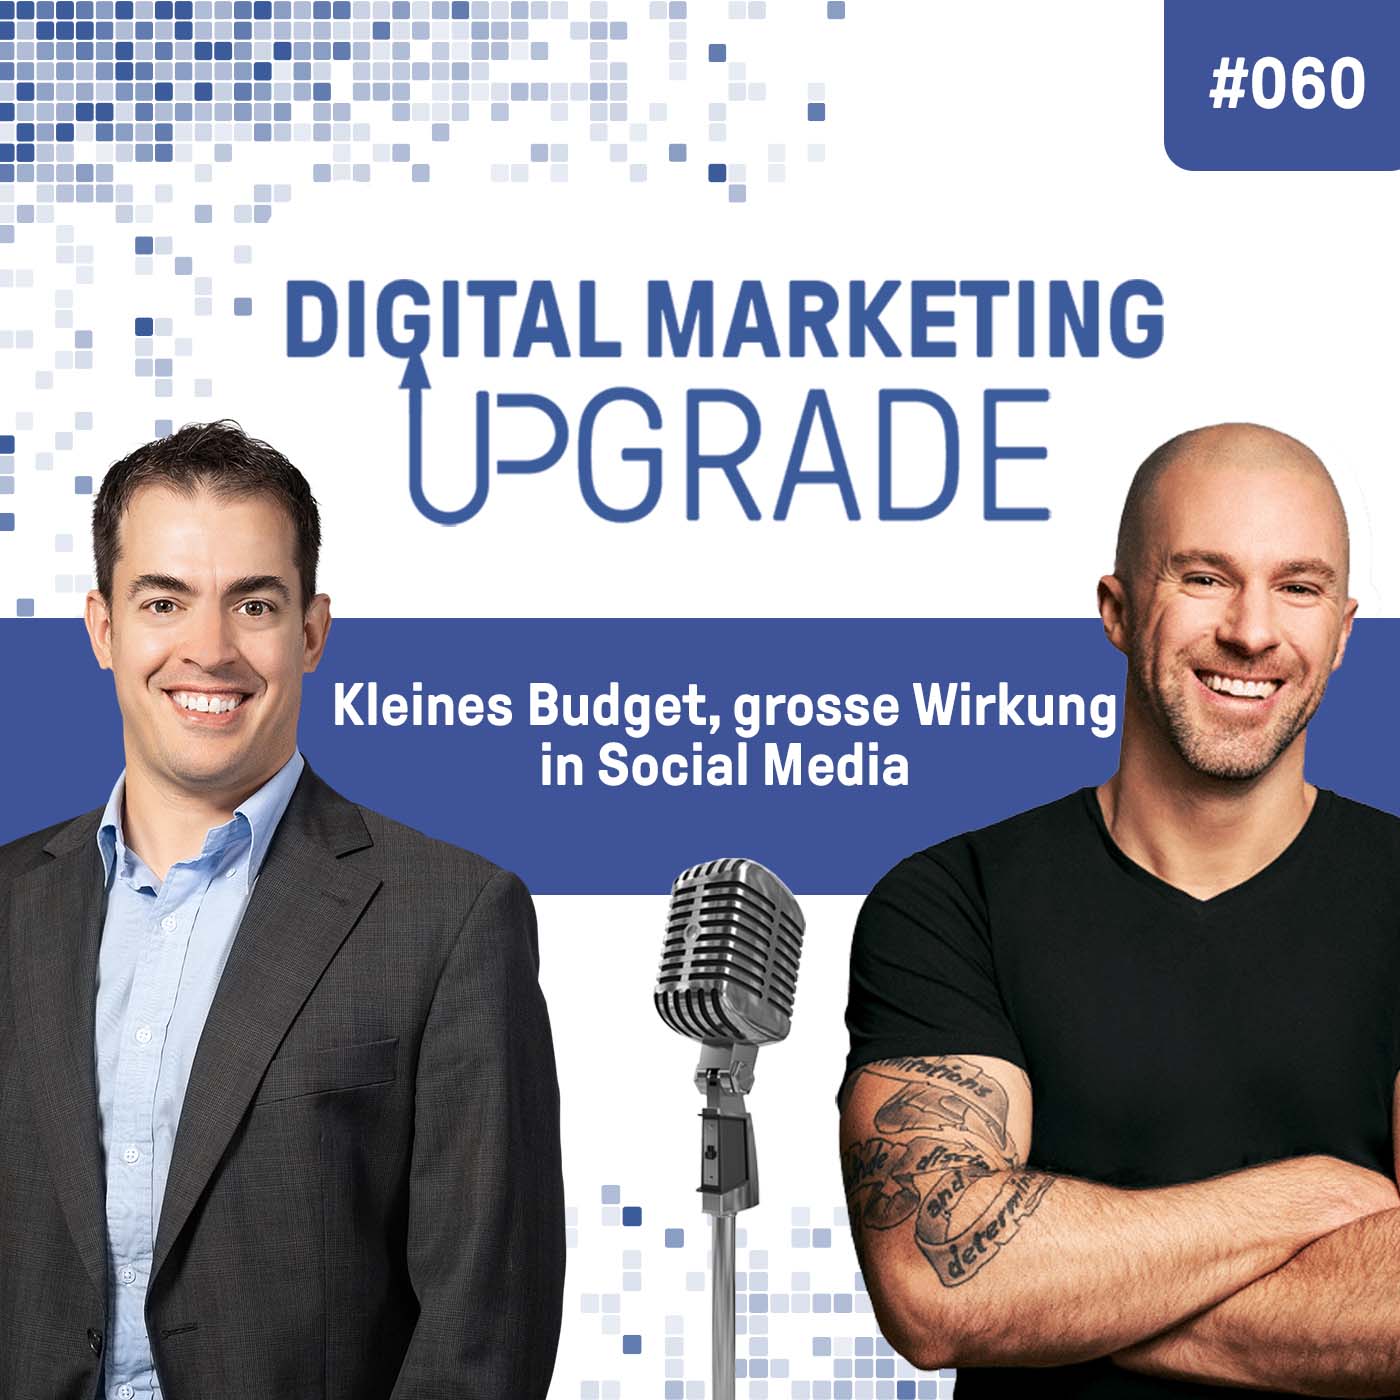 Kleines Budget, grosse Wirkung in Social Media - mit Felix Beilharz #060 -  Digital Marketing Upgrade - Podcast